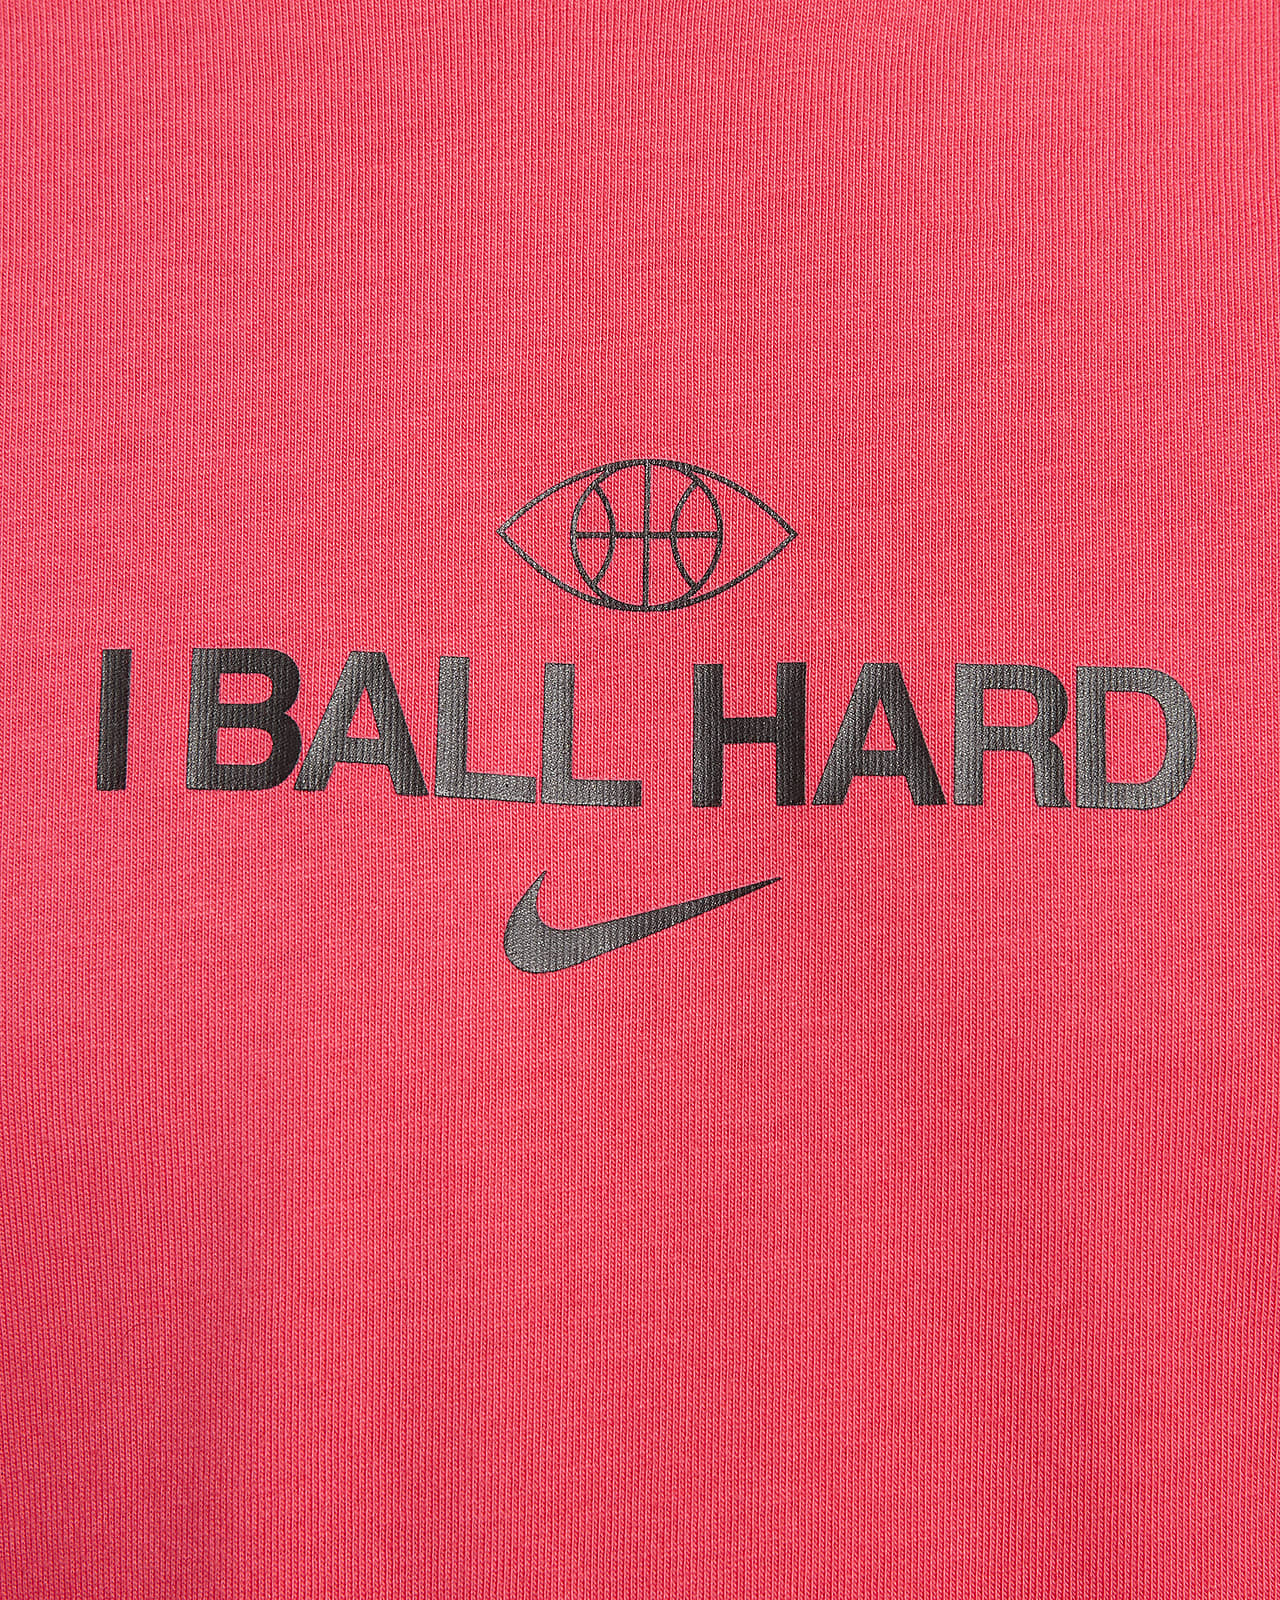 Nike Ja Men's Max90 Basketball T-Shirt.